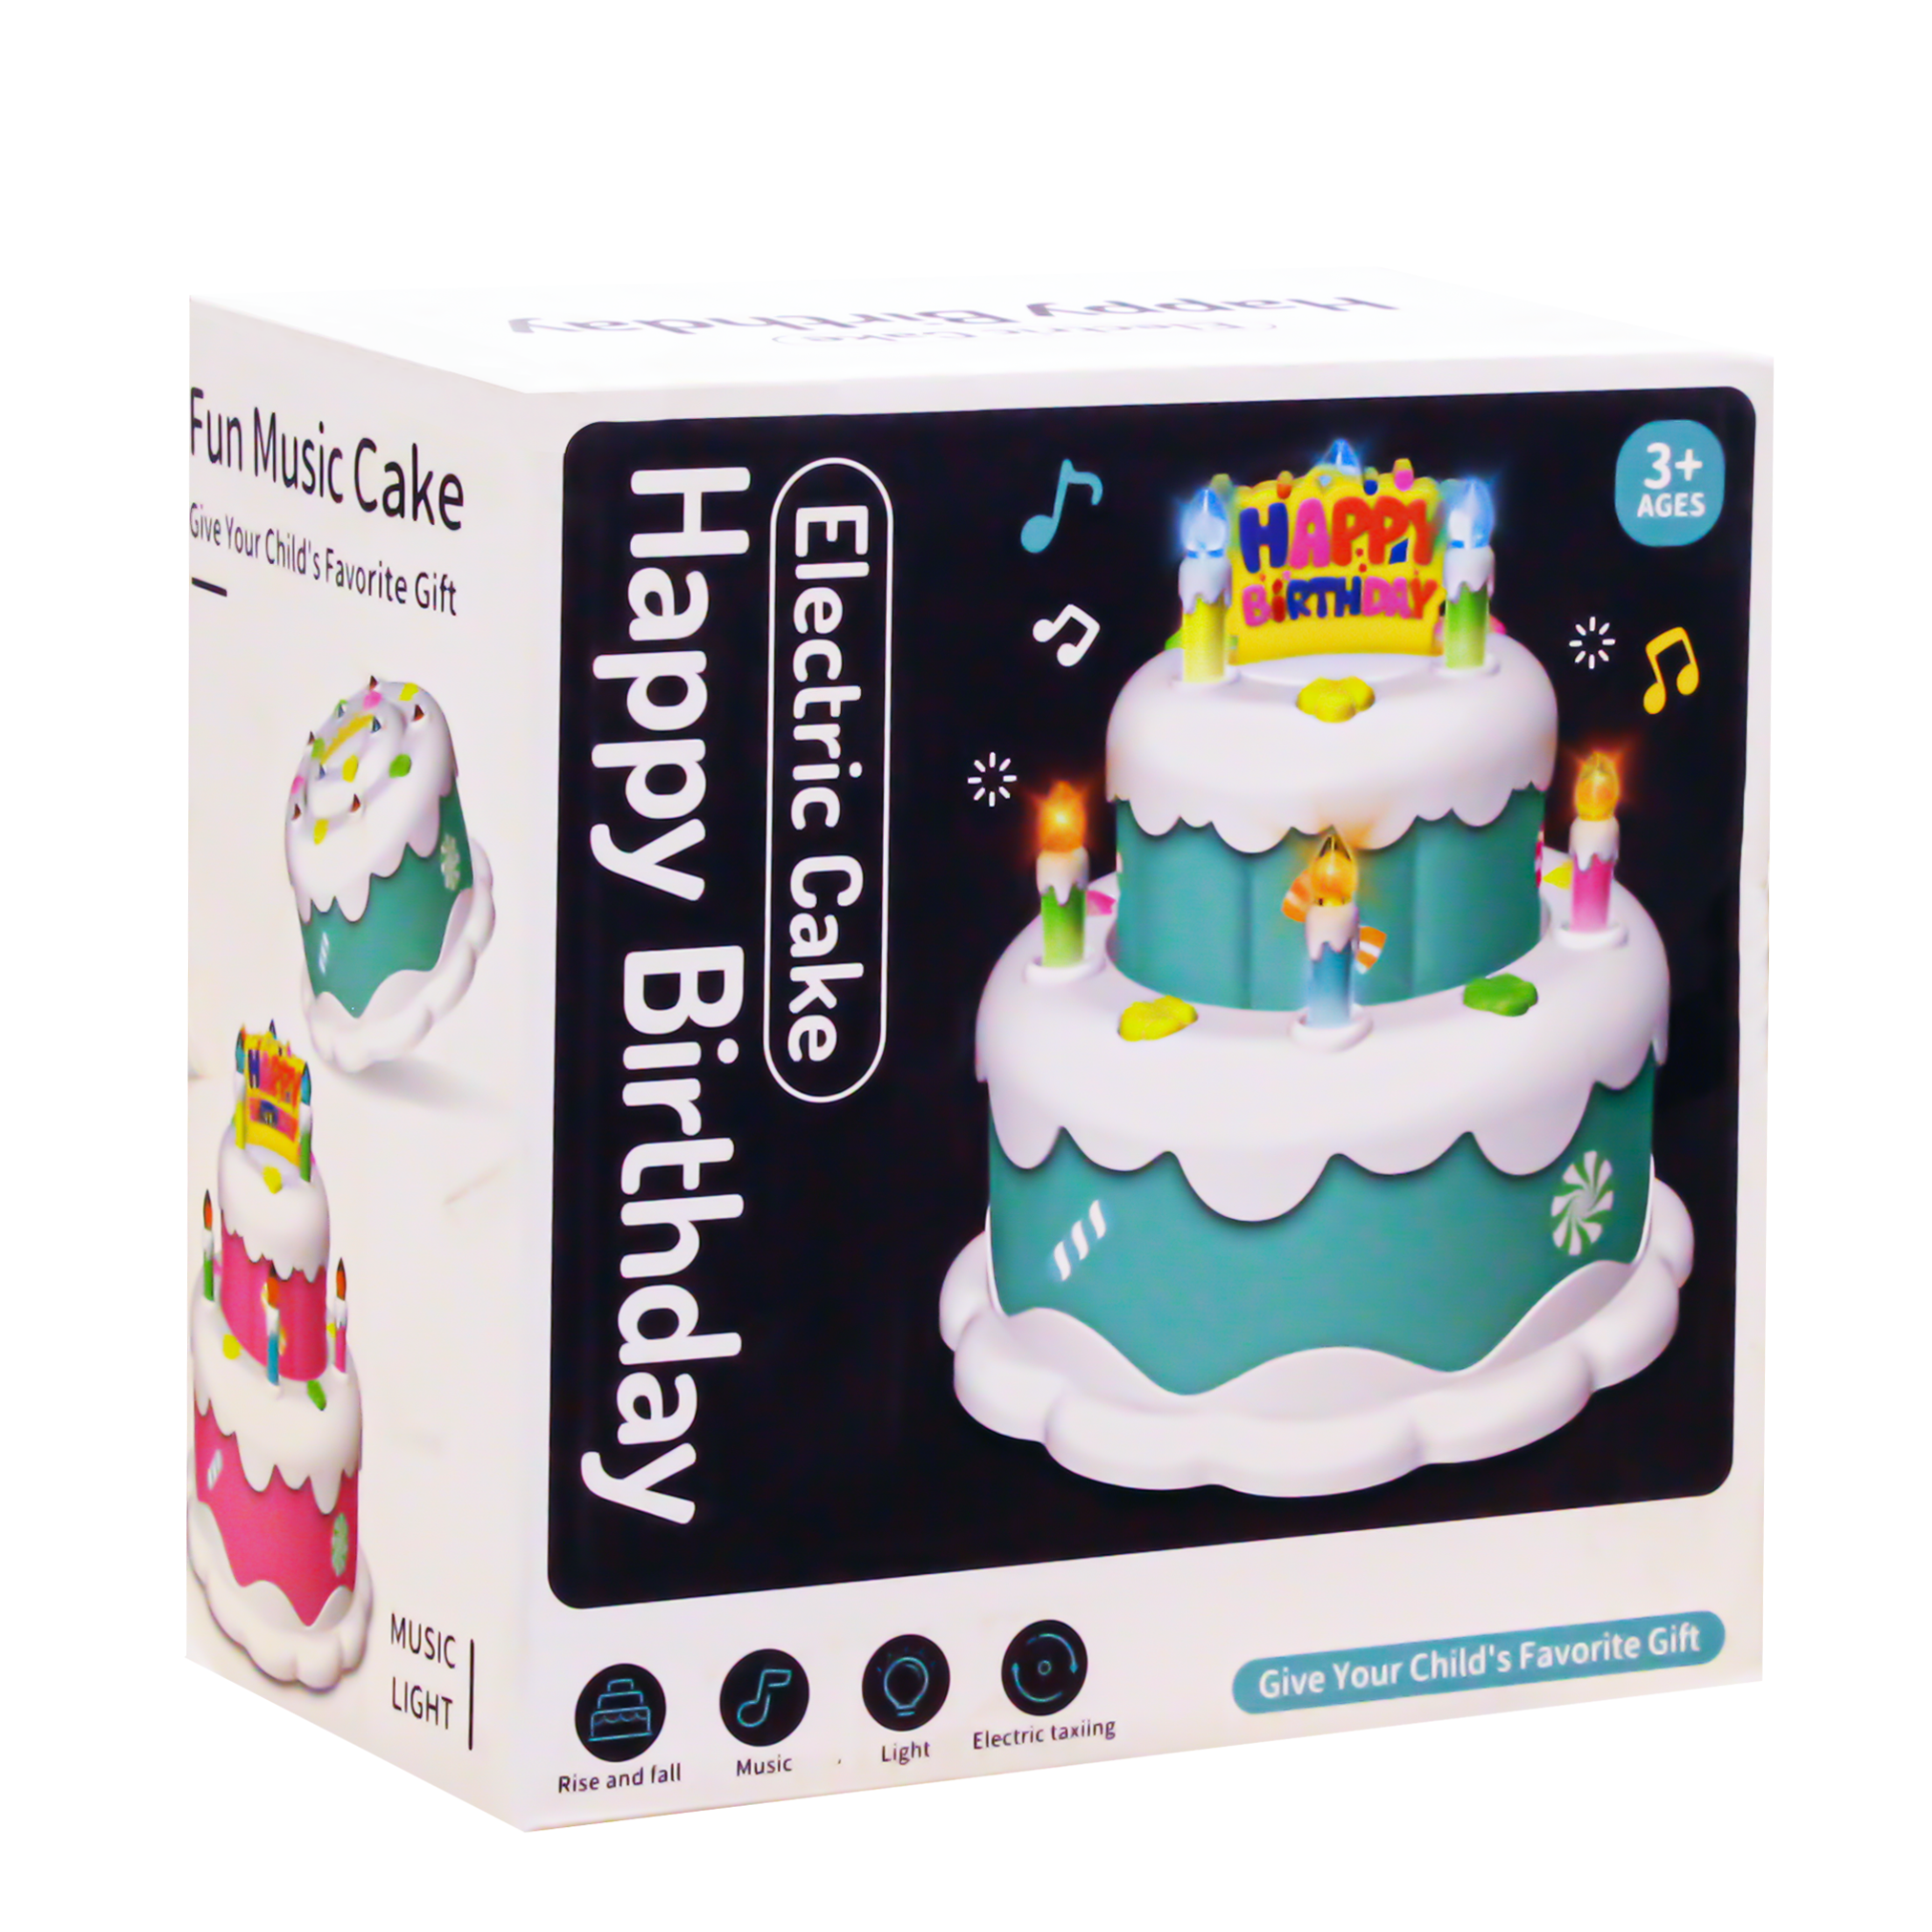 NAVRANGI Double Layer Electric Birthday Cake